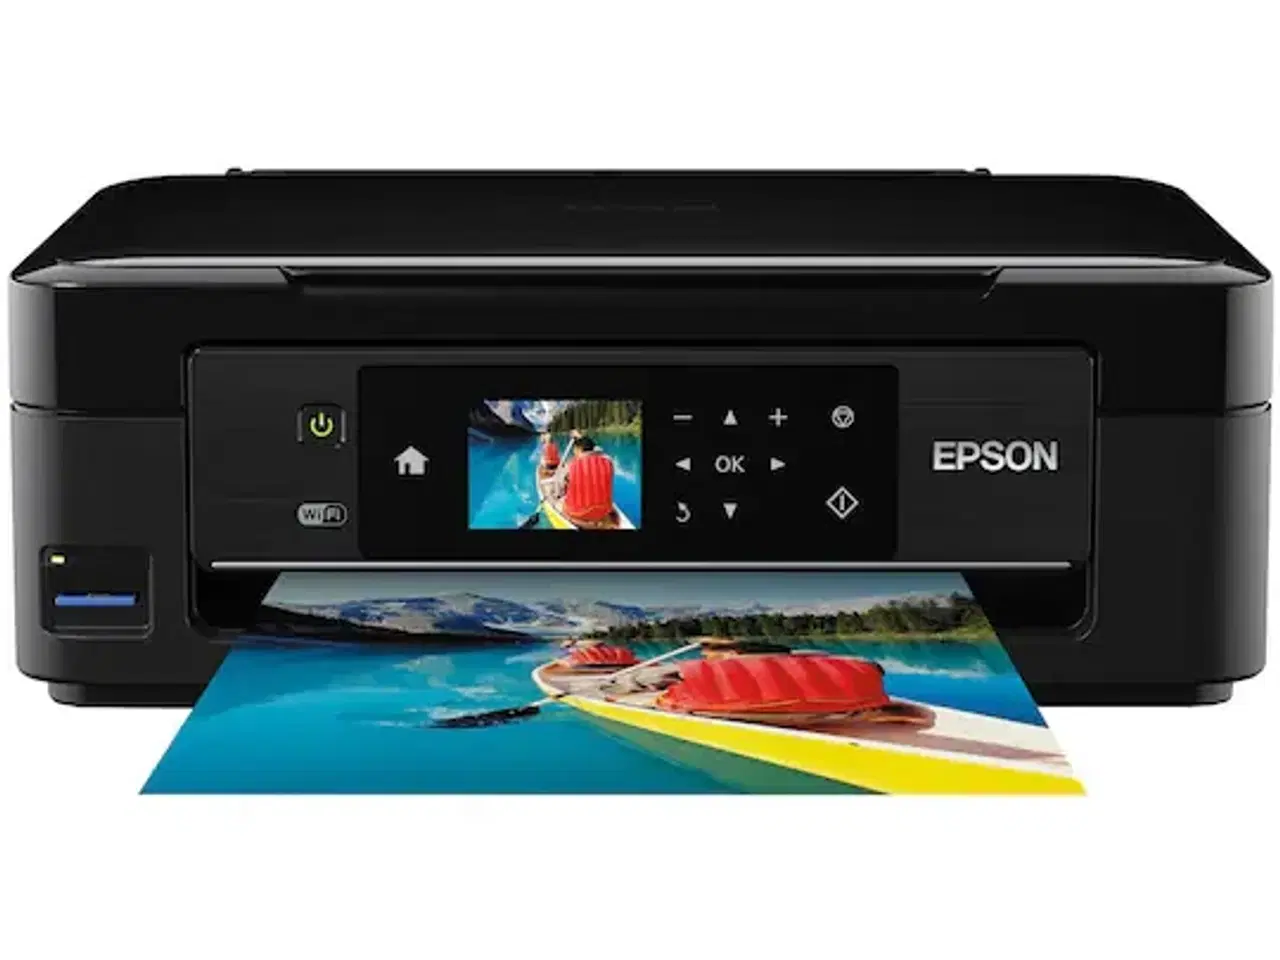 Billede 1 - Epson Expression Home XP-422 AIO inkjet printer